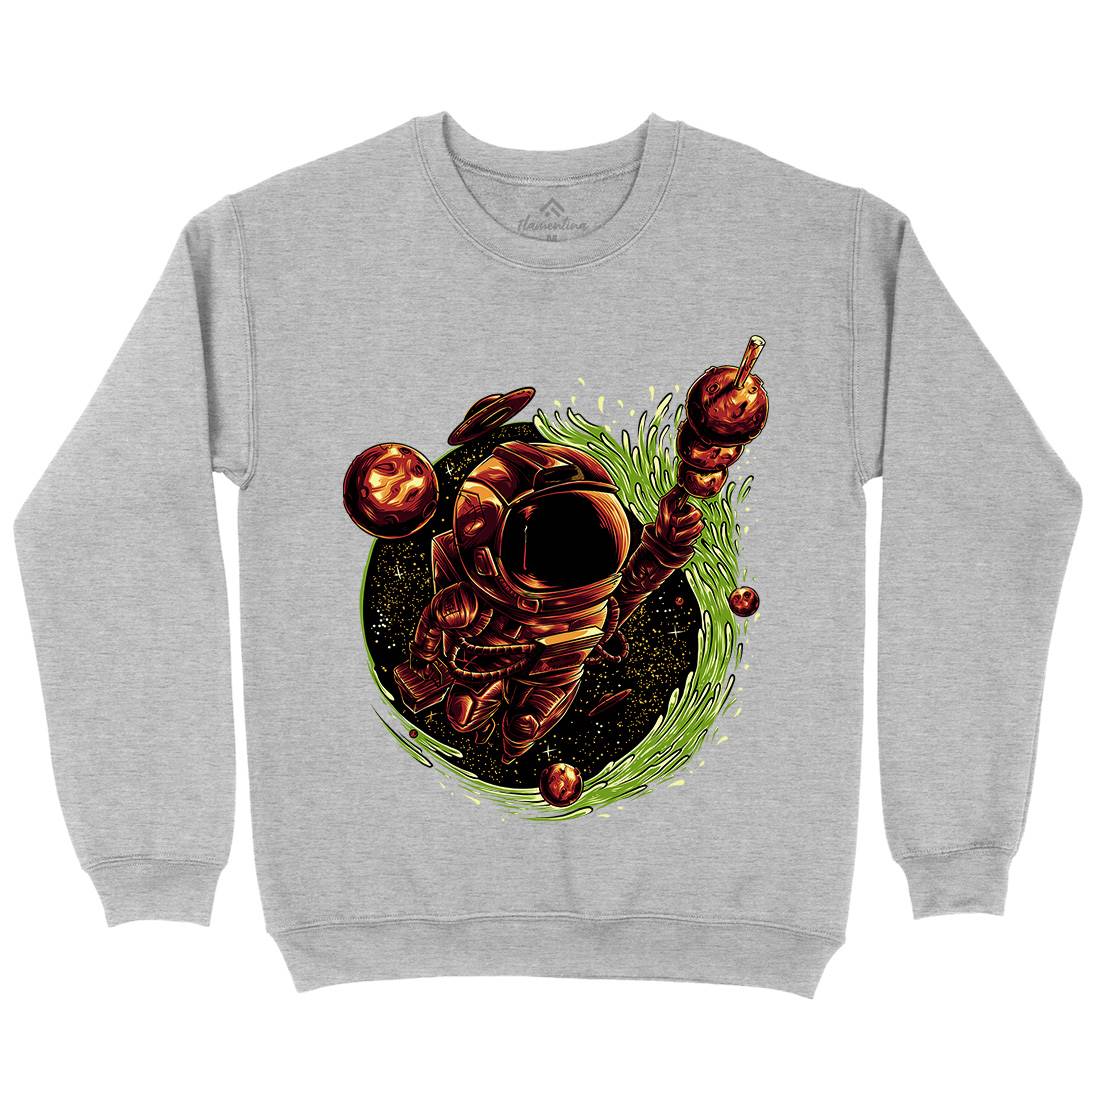 Grilled Meatball Mens Crew Neck Sweatshirt Space D037